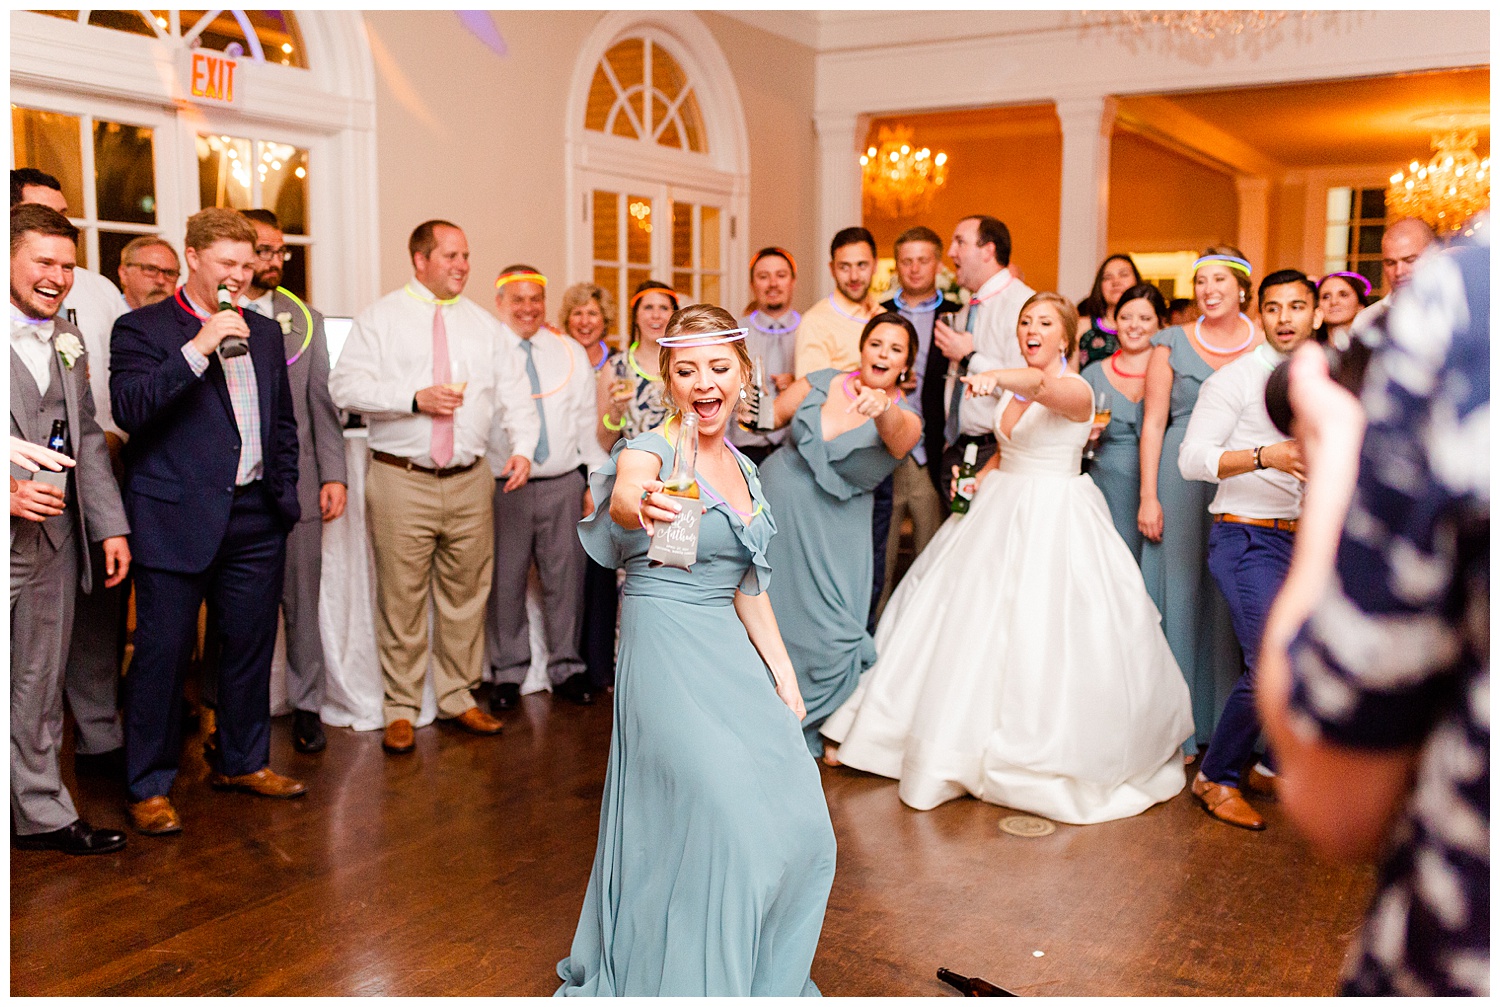 fun reception photos with bridesmaids dancing